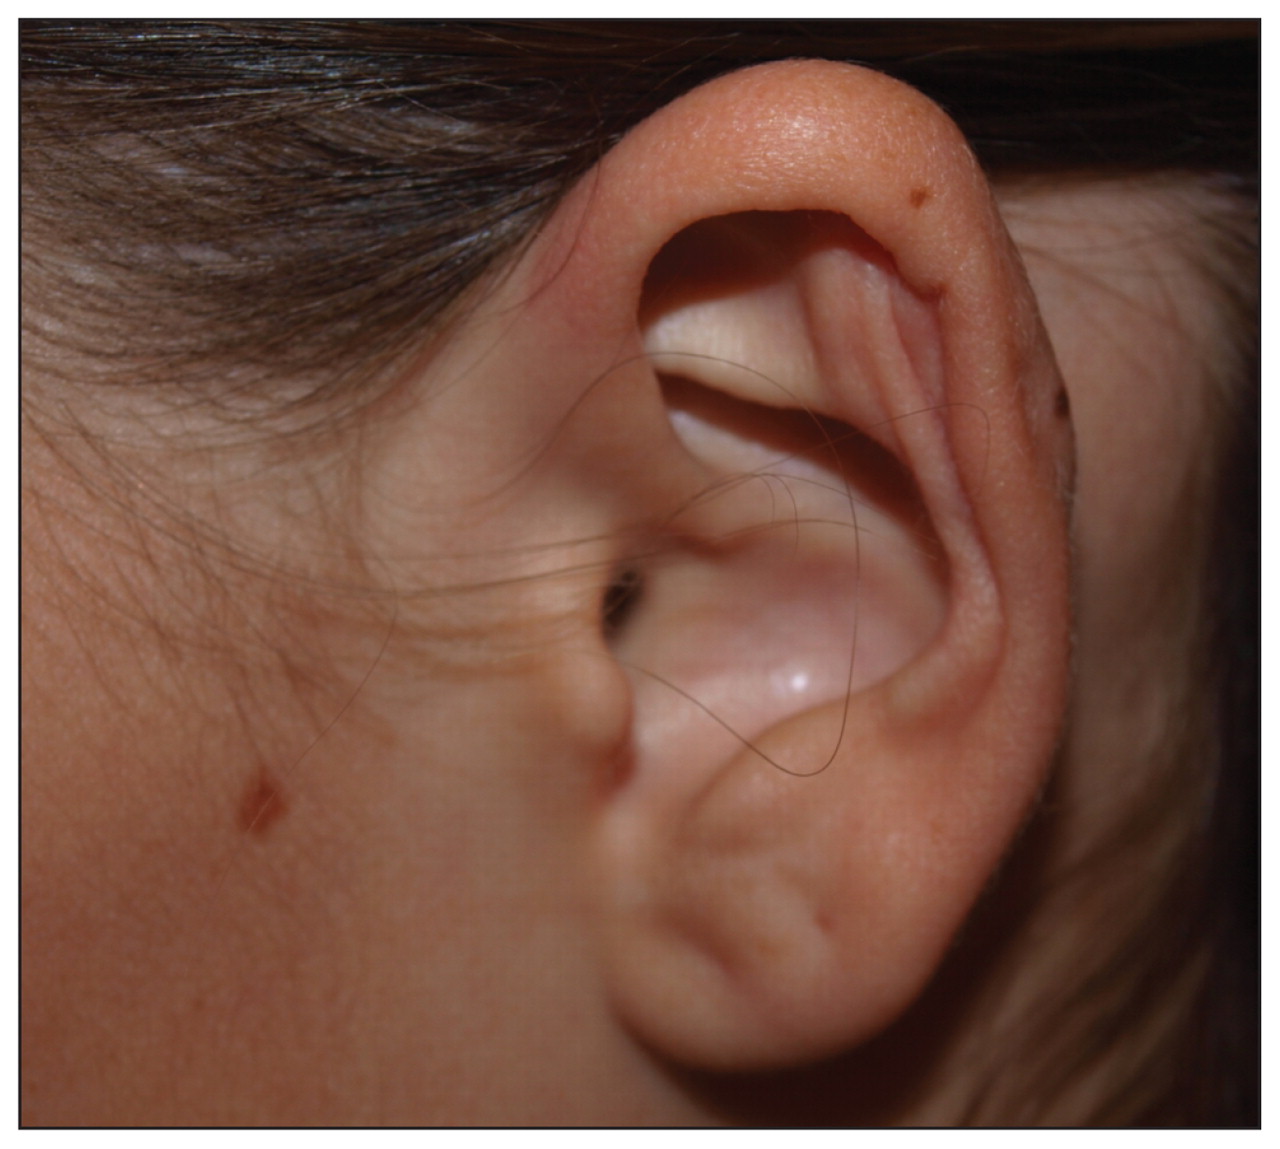 pseudomonas aeruginosa ear infection